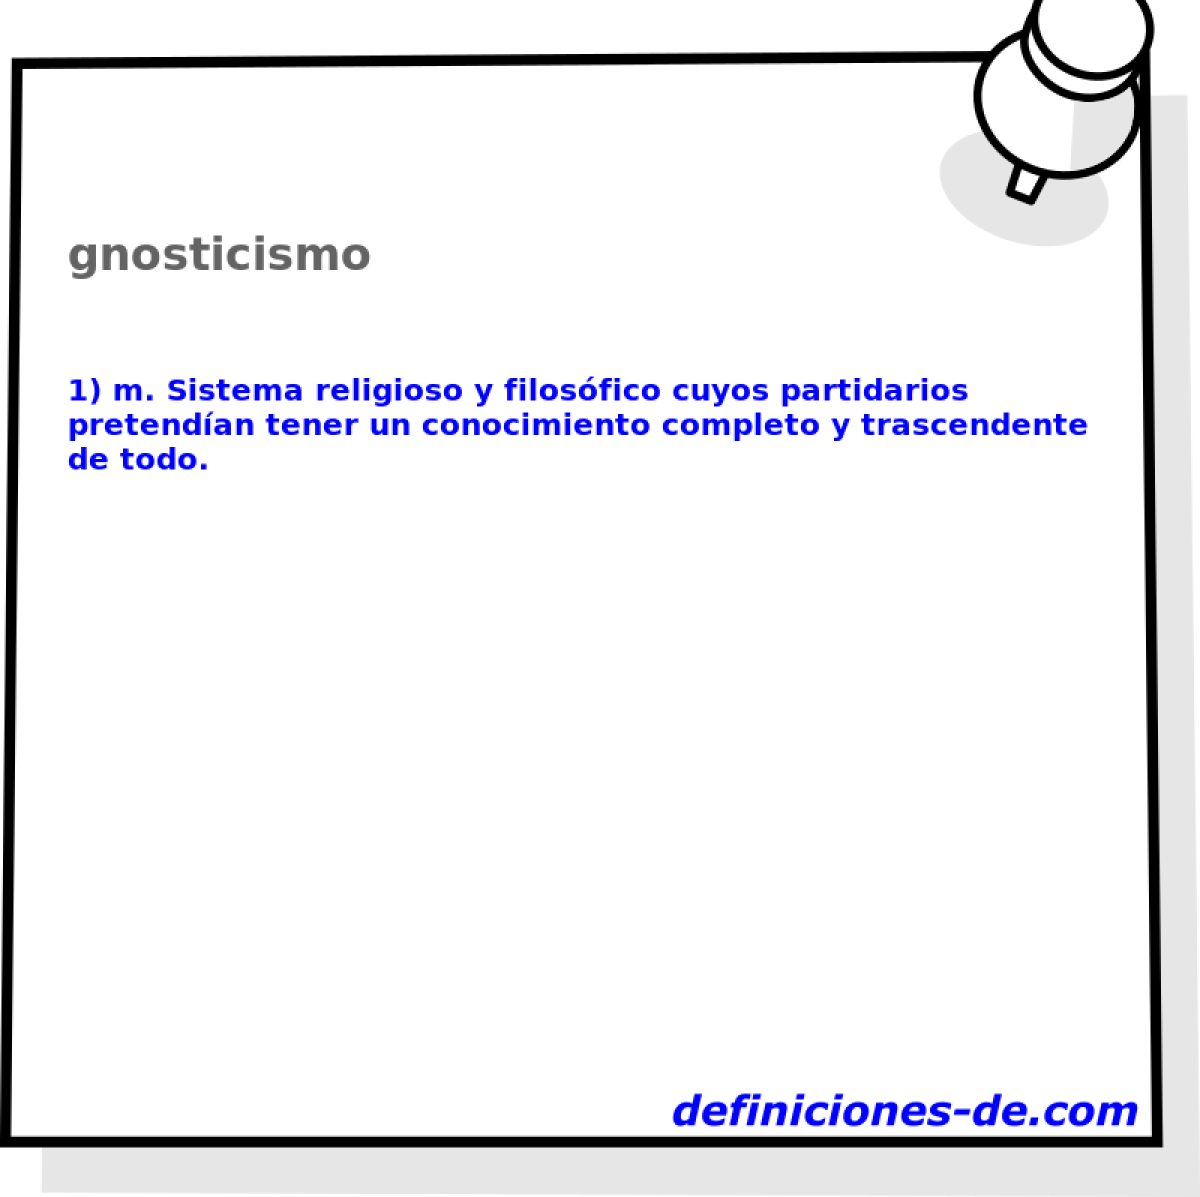 gnosticismo 